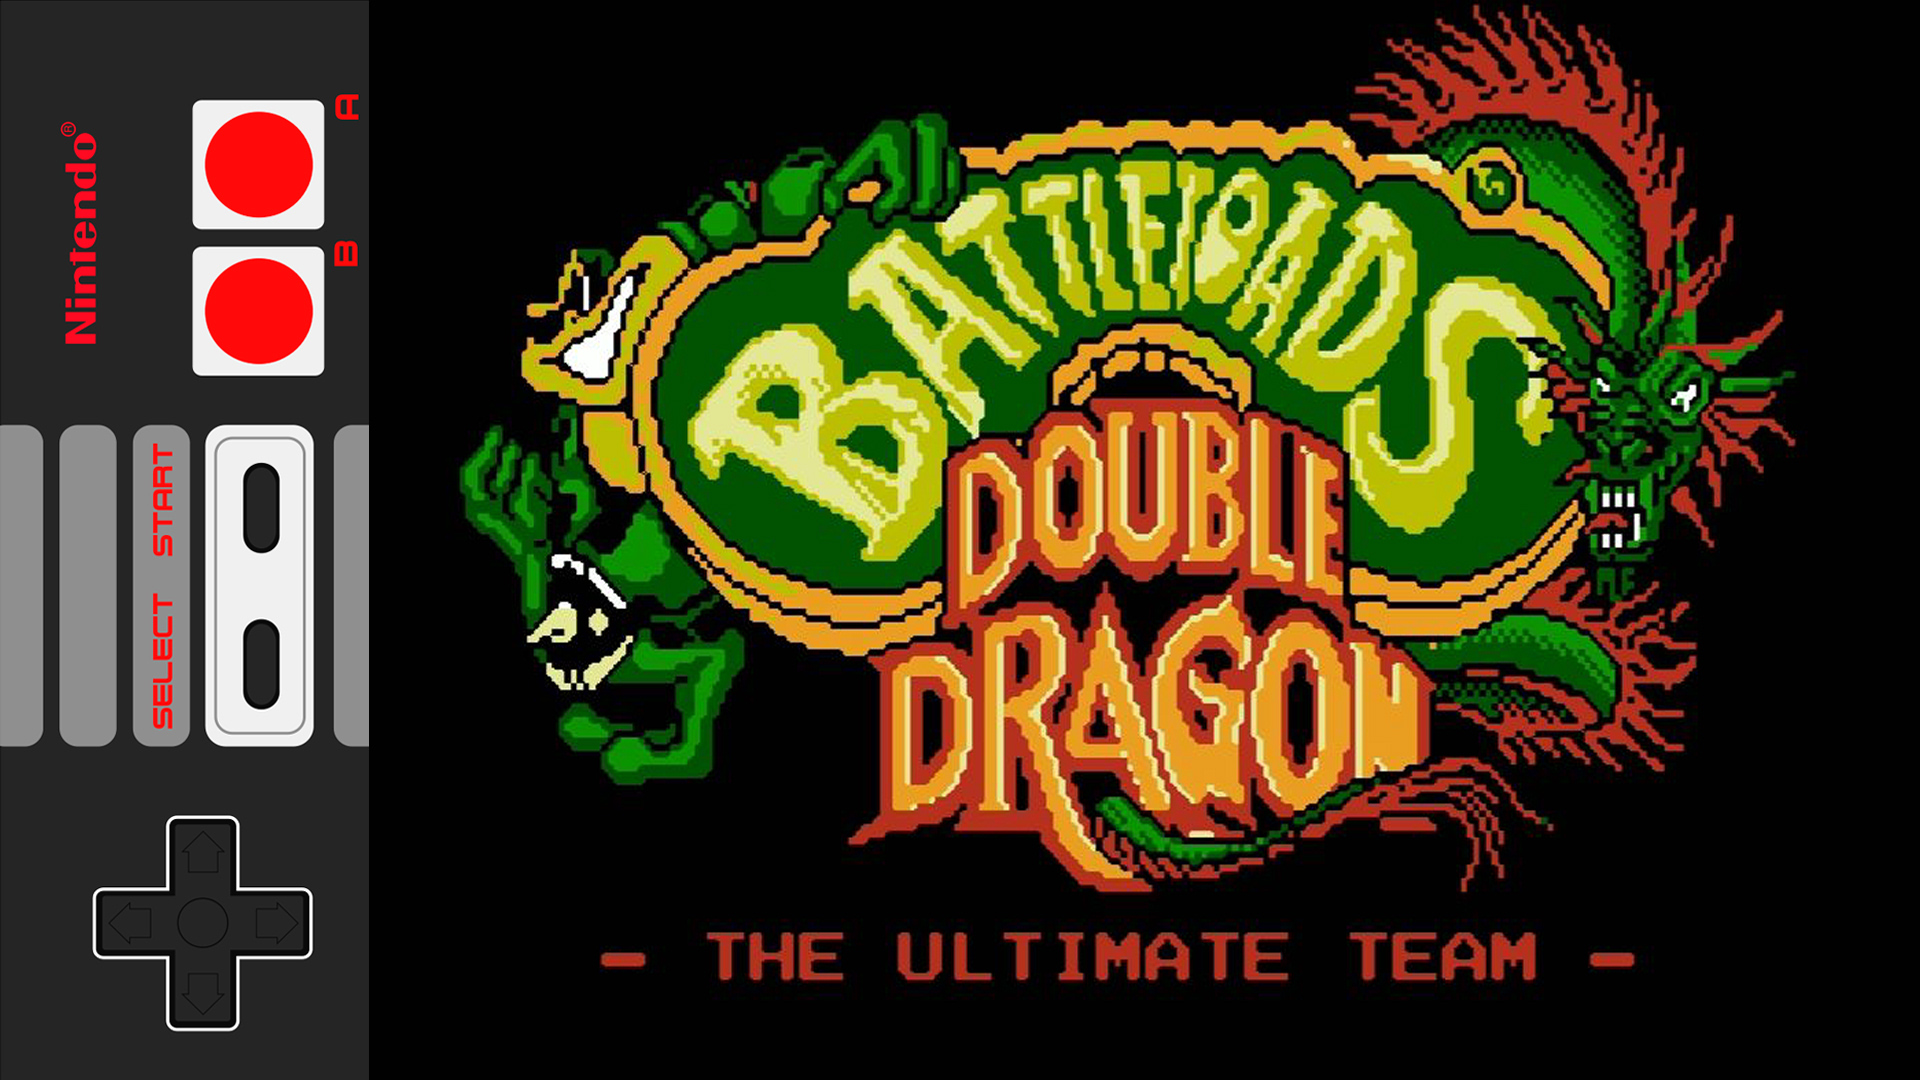 Дабл драгон денди. Battletoads Double Dragon the Ultimate Team NES. Battletoads & Double Dragon - the Ultimate Team. Battletoads Double Dragon Денди. Battletoads Double Dragon Sega.